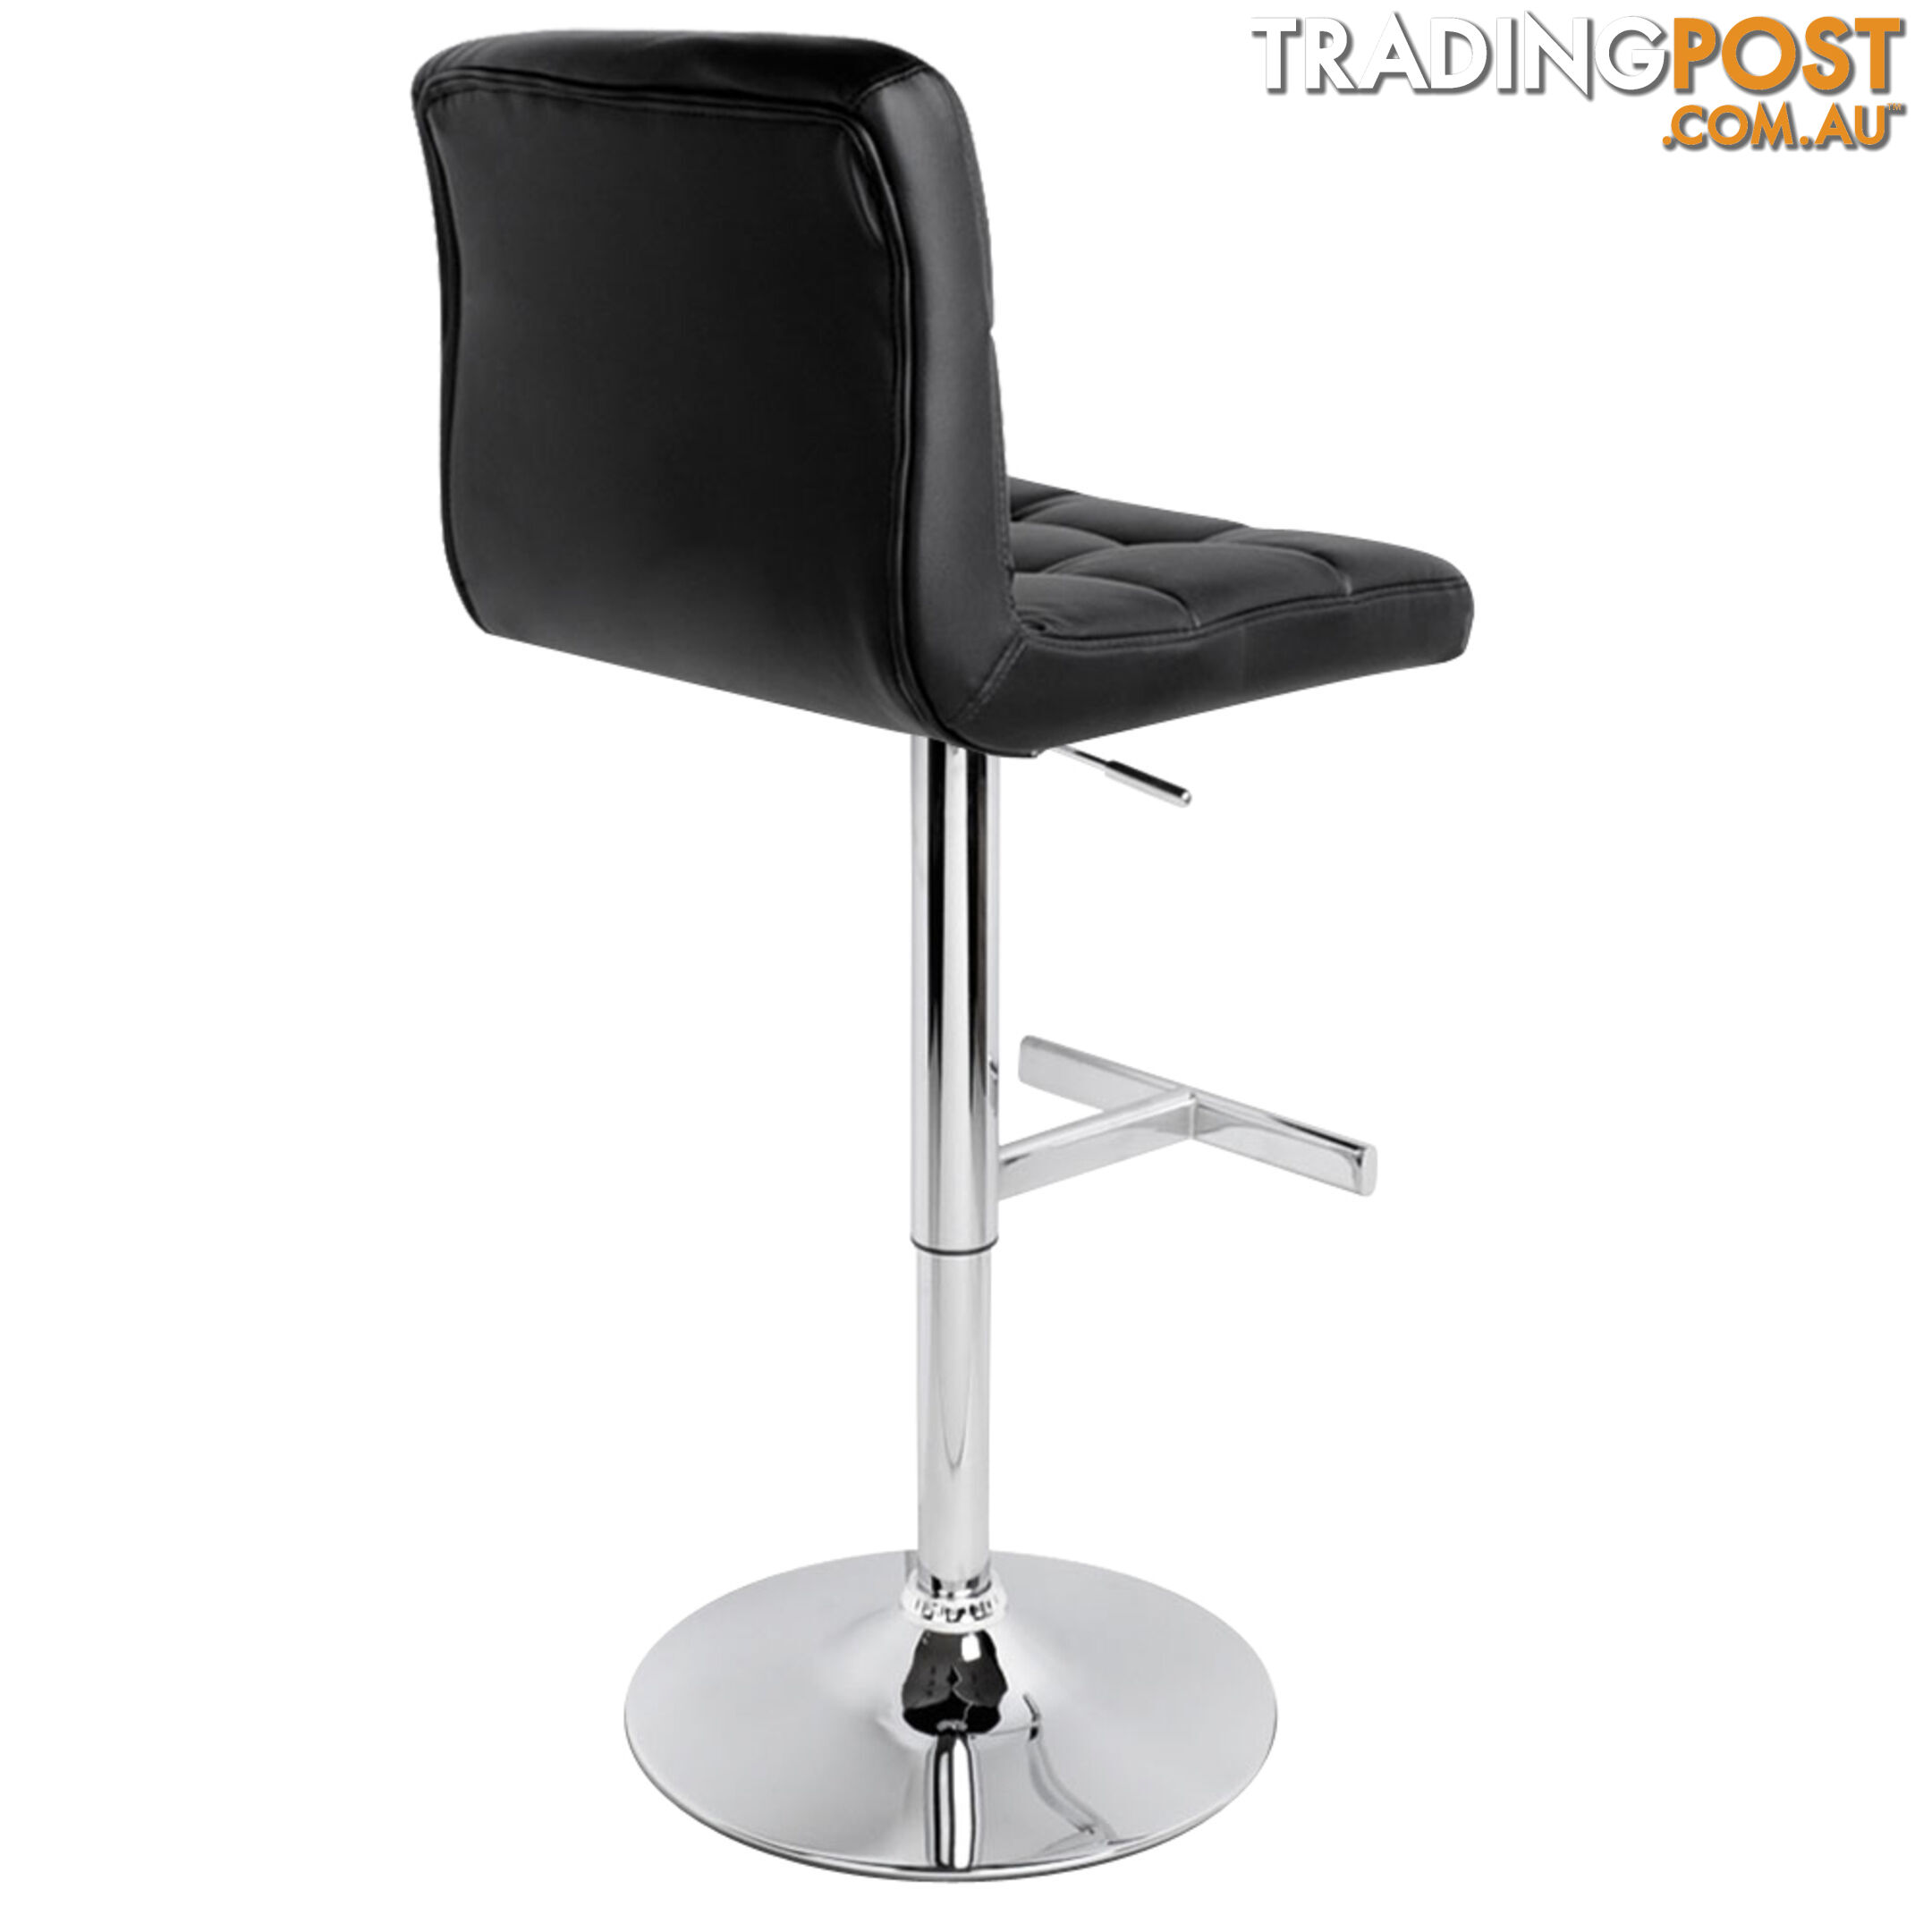 2 x PU Leather Gas Lift Bar Stool Kitchen Office Pub Barstool Swivel Chair Black